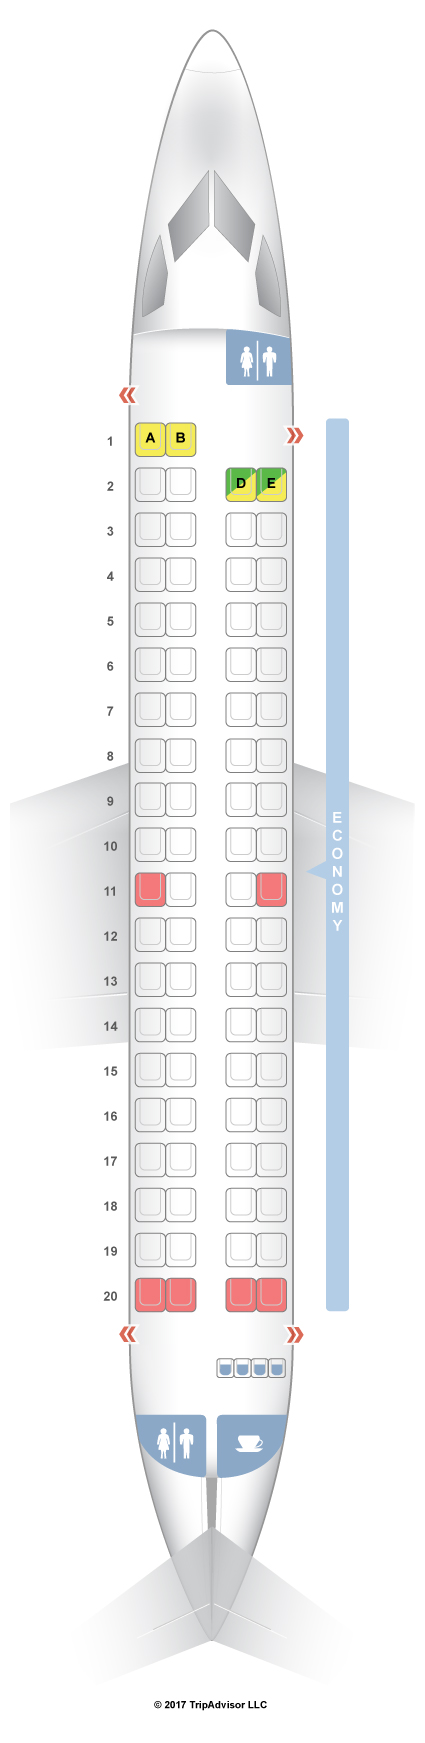 alaska: 42+ Alaska Airlines Bombardier Q400 Seat Map Images